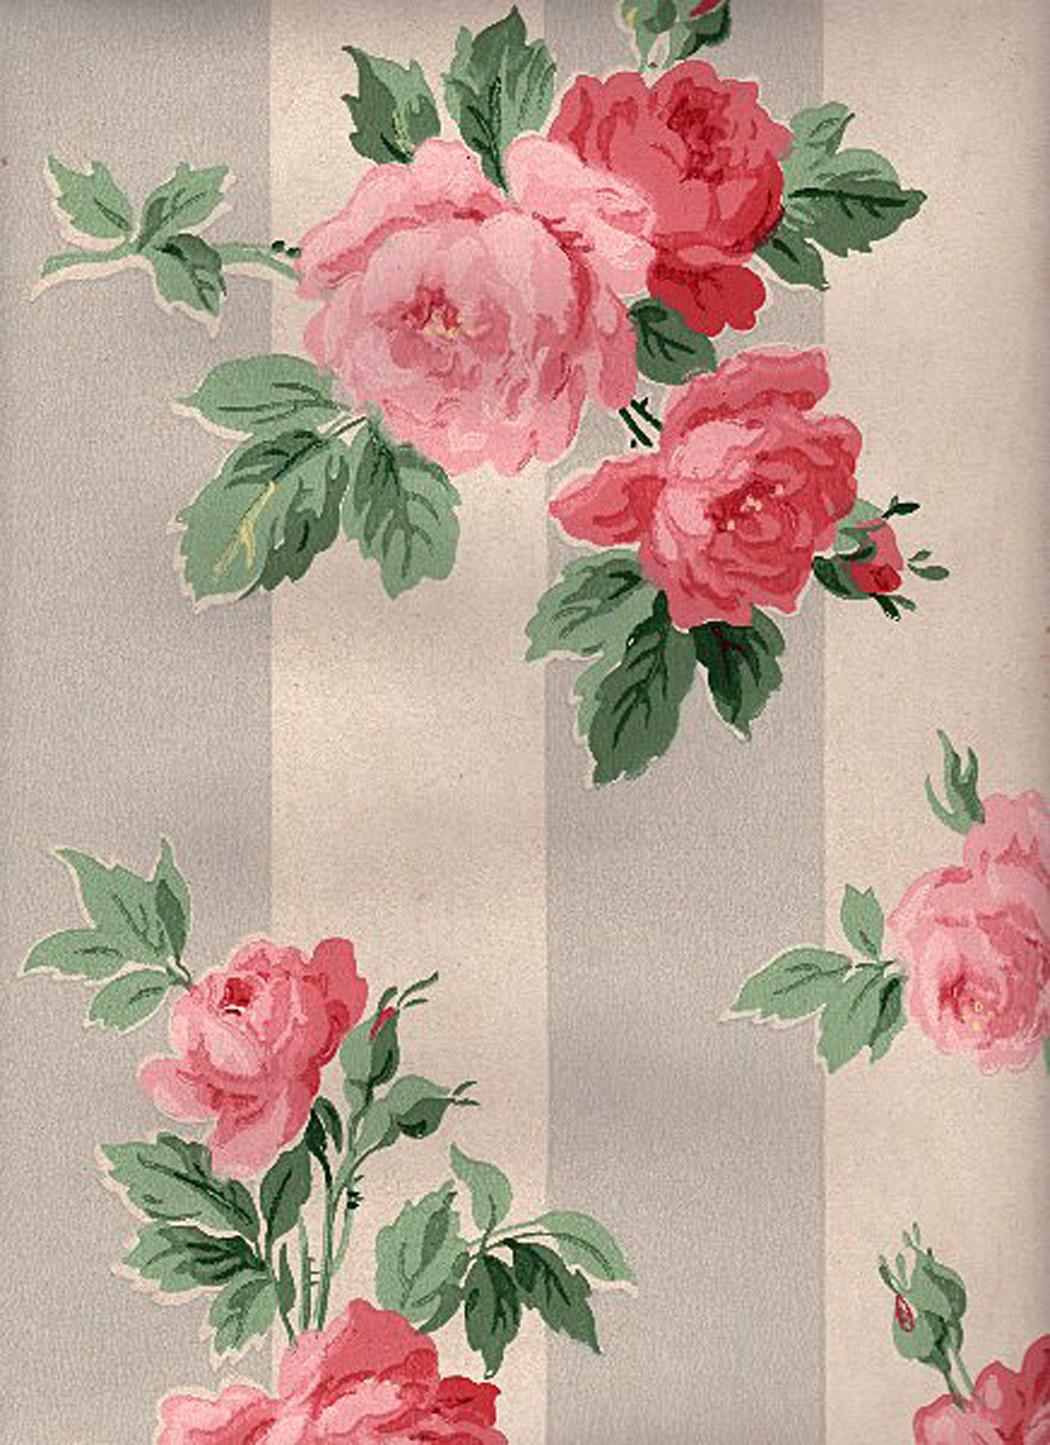 Vintage Roses iPhone Wallpaper 1050x1445